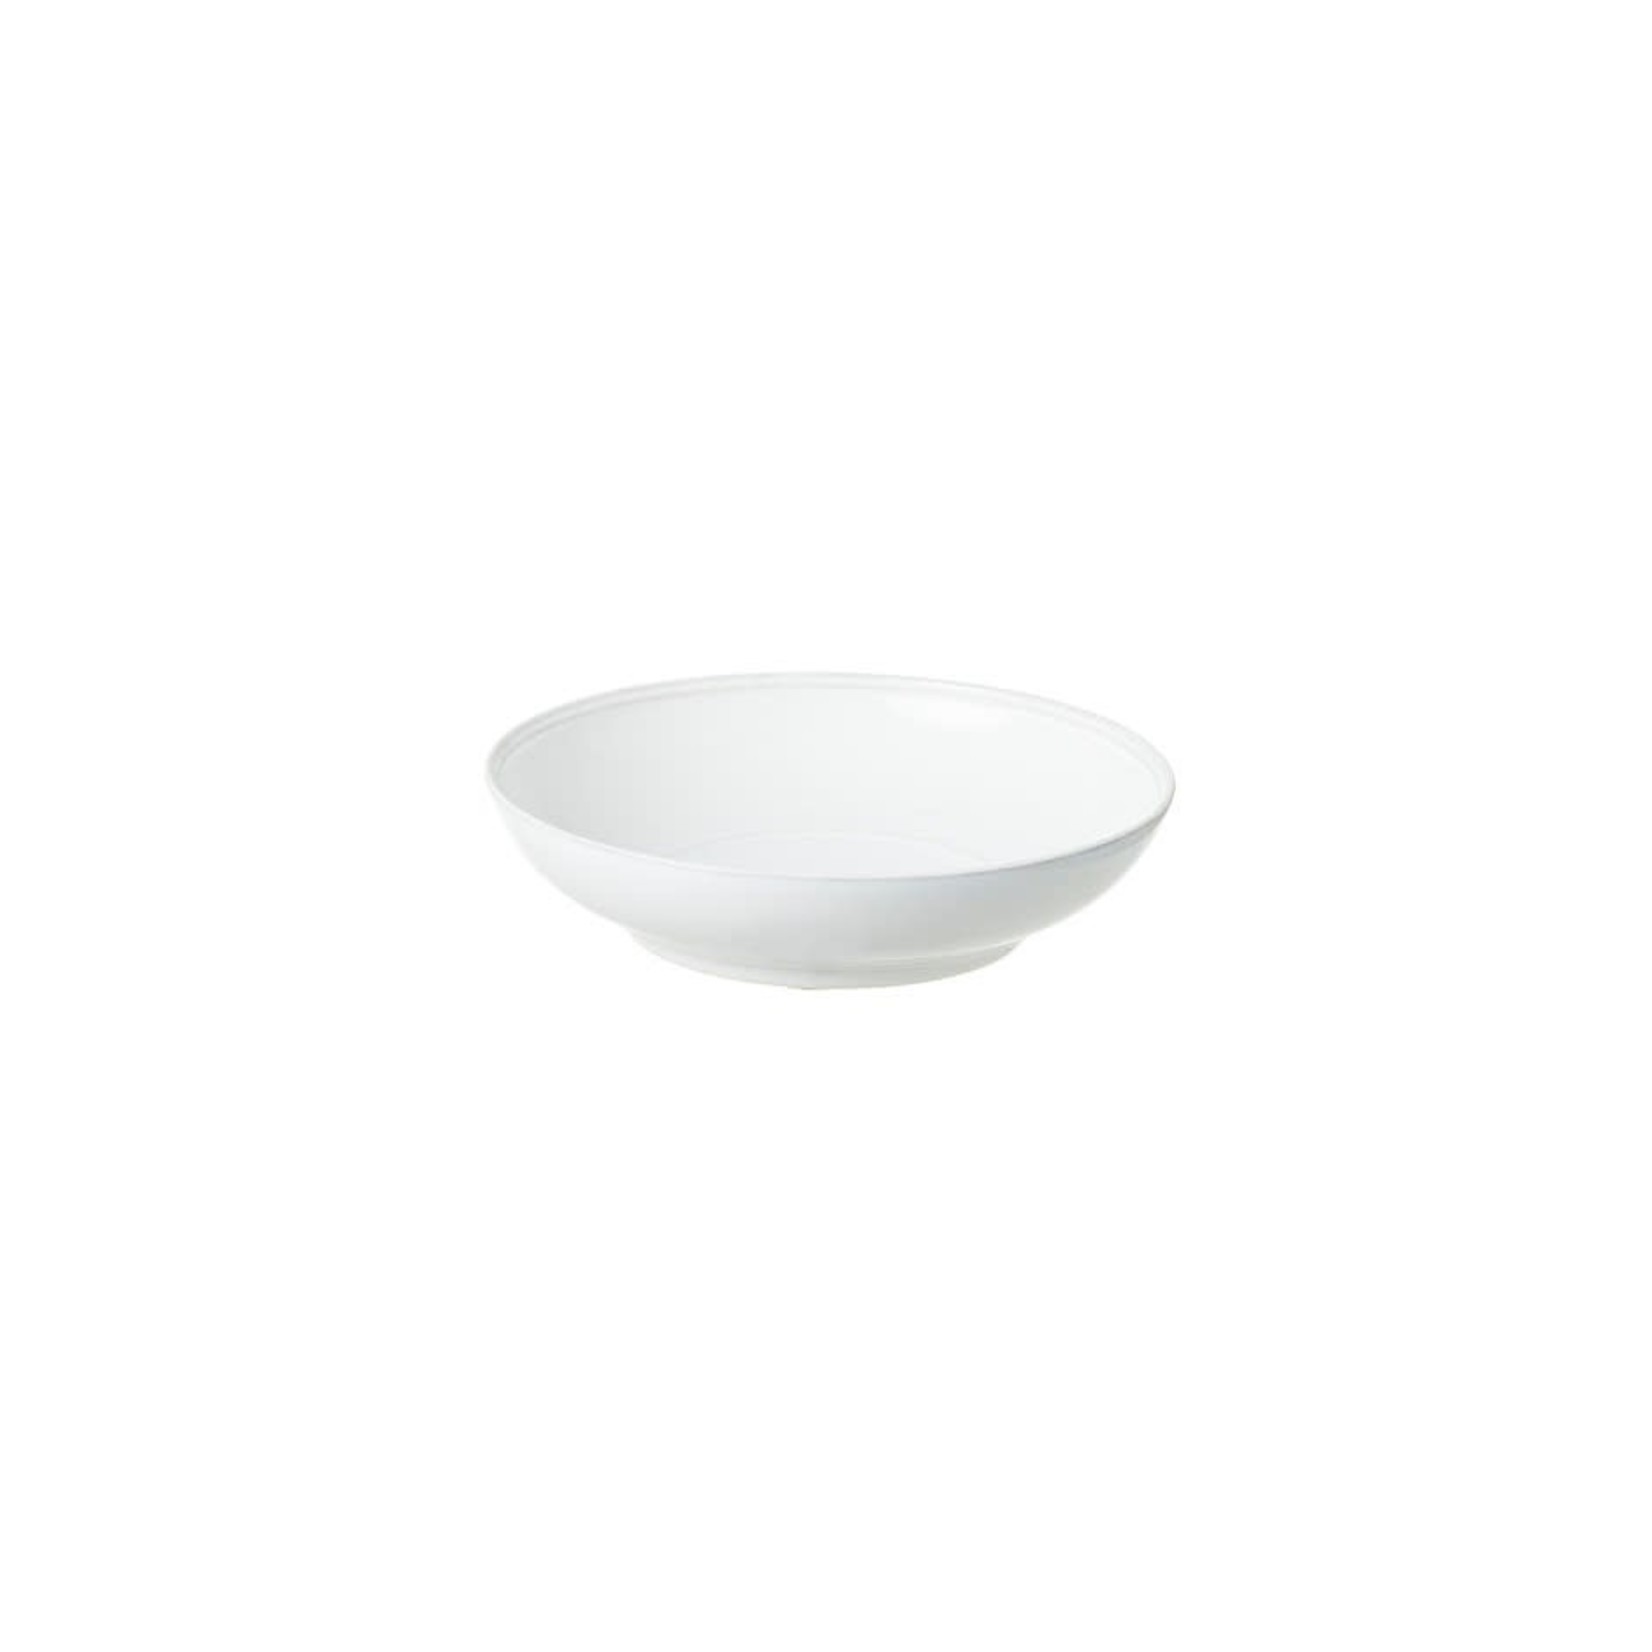 CASAFINA COSTA NOVA Friso Pasta Bowl 23cm - White